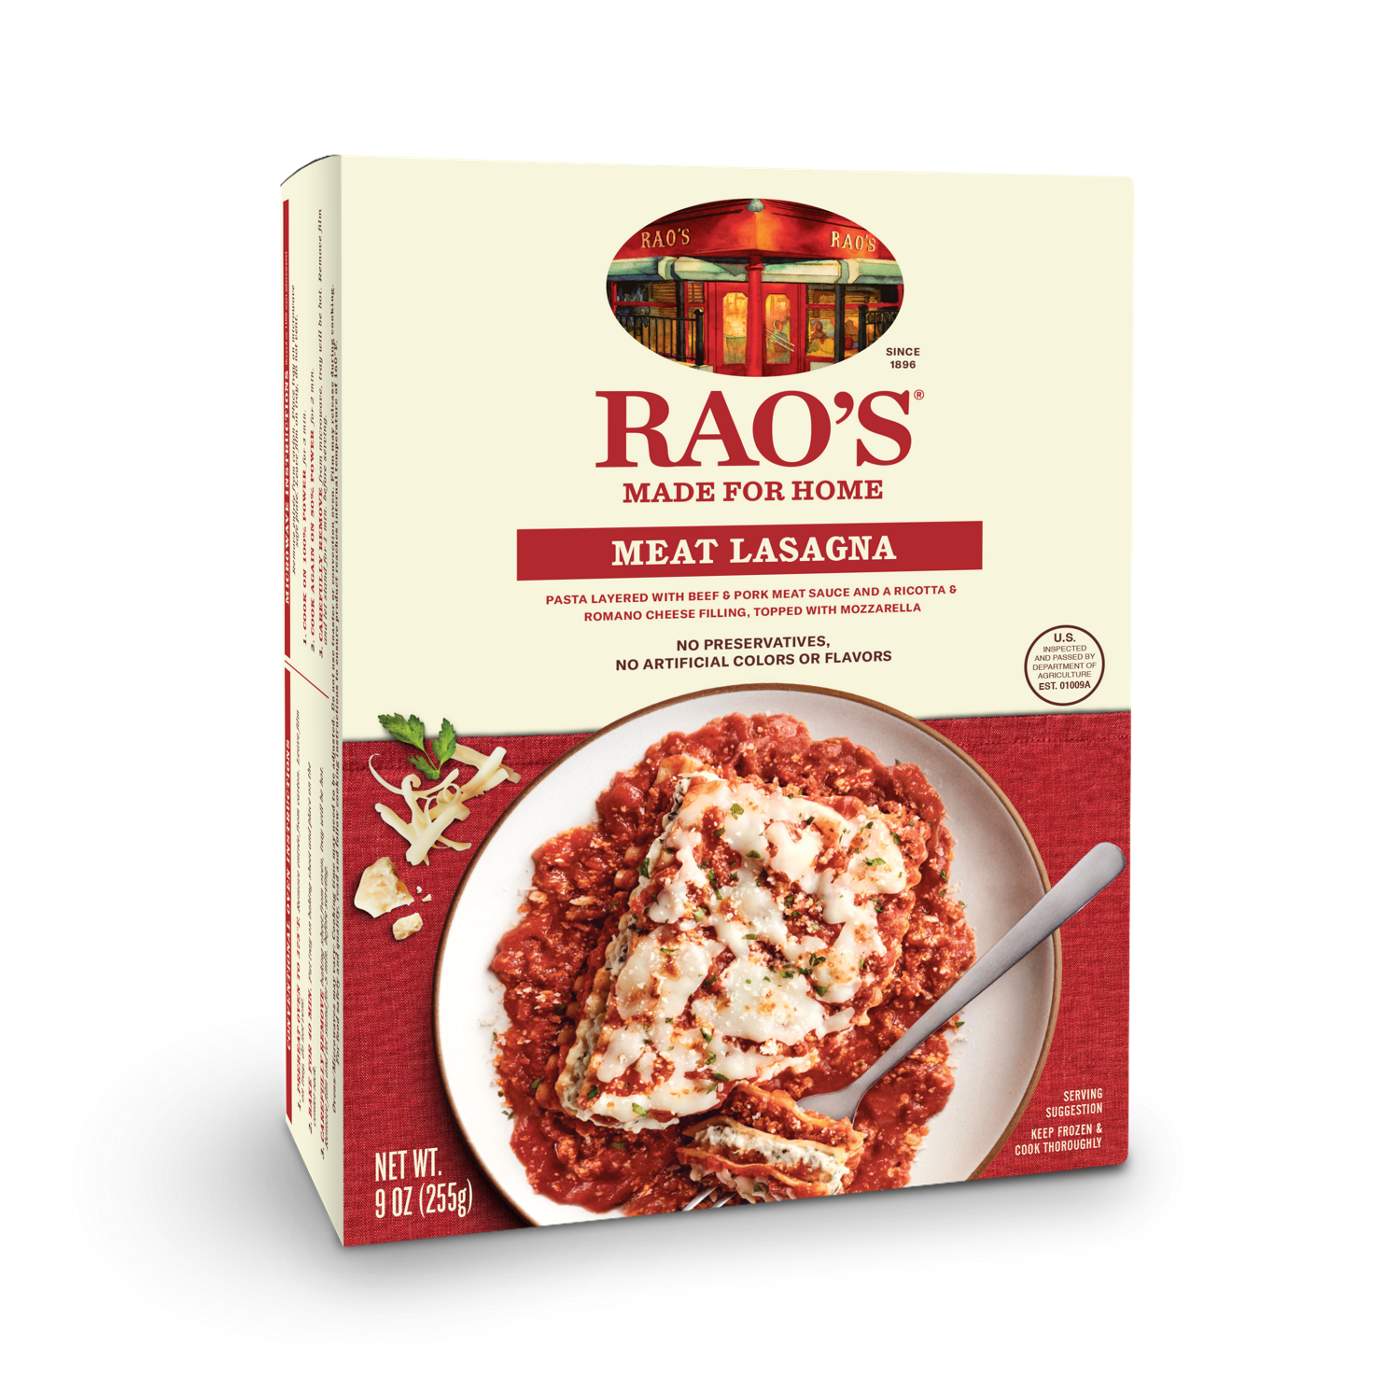 Rao's Meat Lasagna Frozen Meal; image 3 of 3